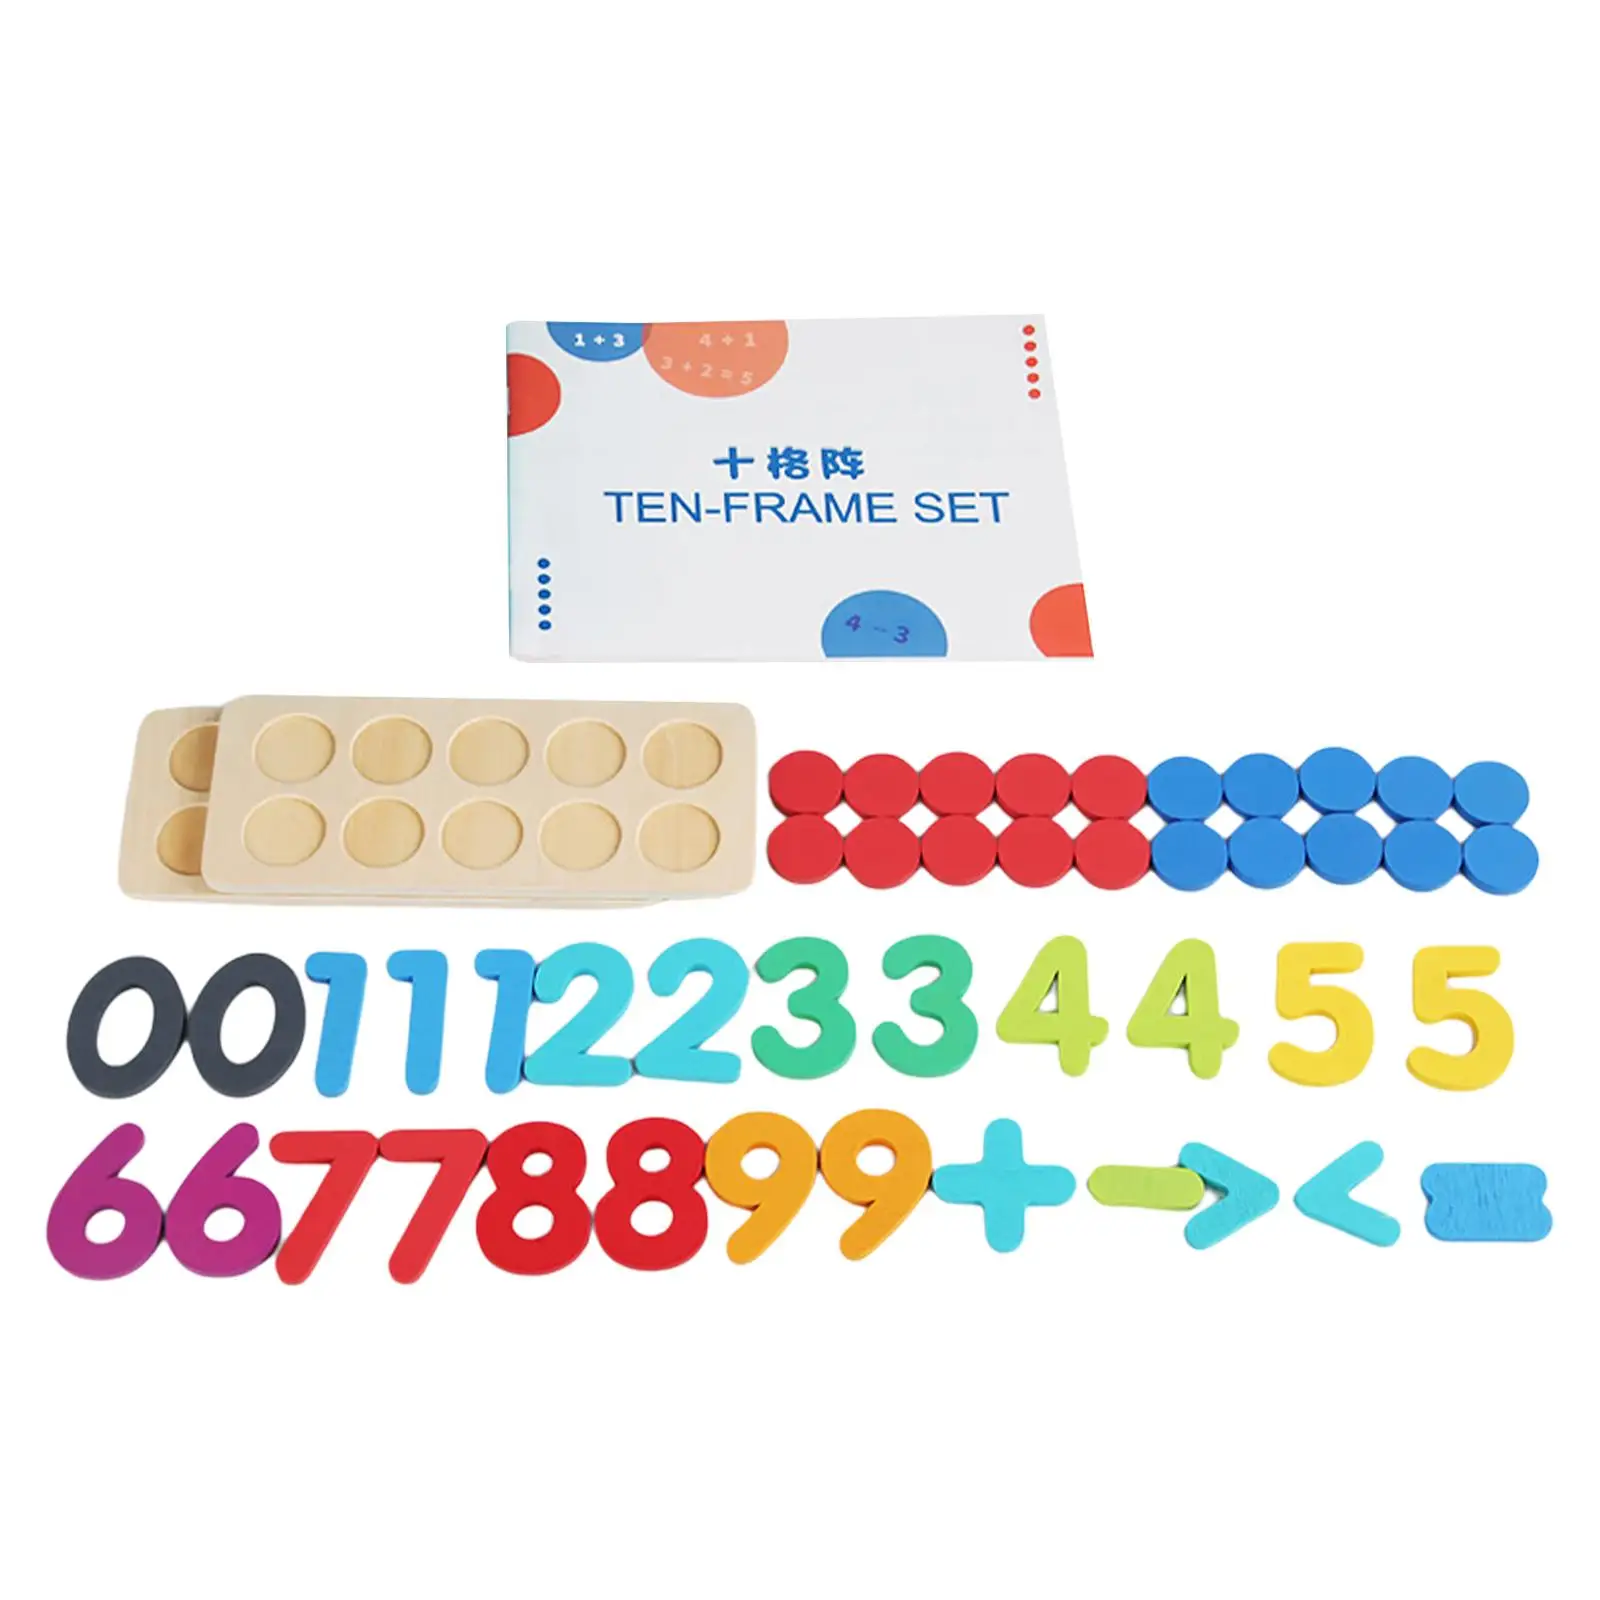 Ten Frame Set Addition Subtraction Learning Classroom Math Set Puzzle Montessori Toys for Preschool Kindergarten Children Age 3+